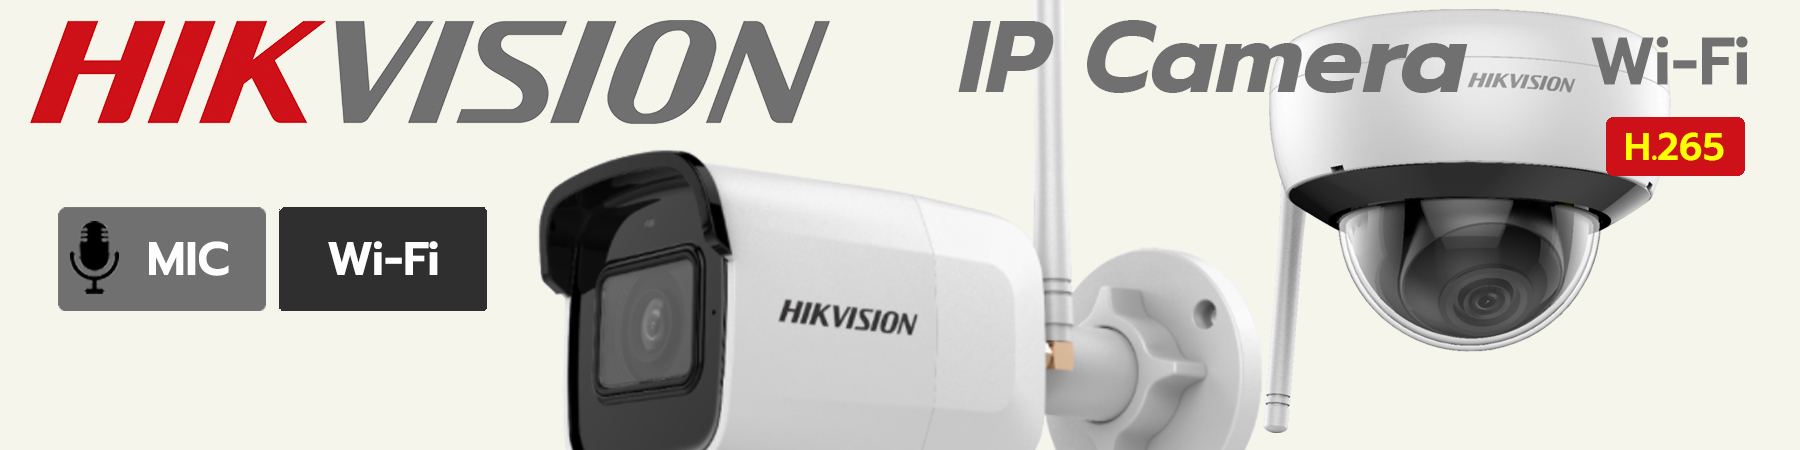 Hikvision Wi-Fi Camera, Hikvision Wi-Fi IP Camera, กล้องไร้สาย Hikvision, ฮิควิชั่น วายฟาย, ไฮค์วิชั่น วายฟาย, Hikvision Cube IPC, กล้อง Hikvision Cube, DS-2CD2021G1-IDW1, DS-2CD2121G1-IDW1, DS-2CD2041G1-IDW1, DS-2CD2141G1-IDW1, , DS-2CD2421G0-IW, DS-2CD2423G0-IW, DS-2CD2425FWD-IW